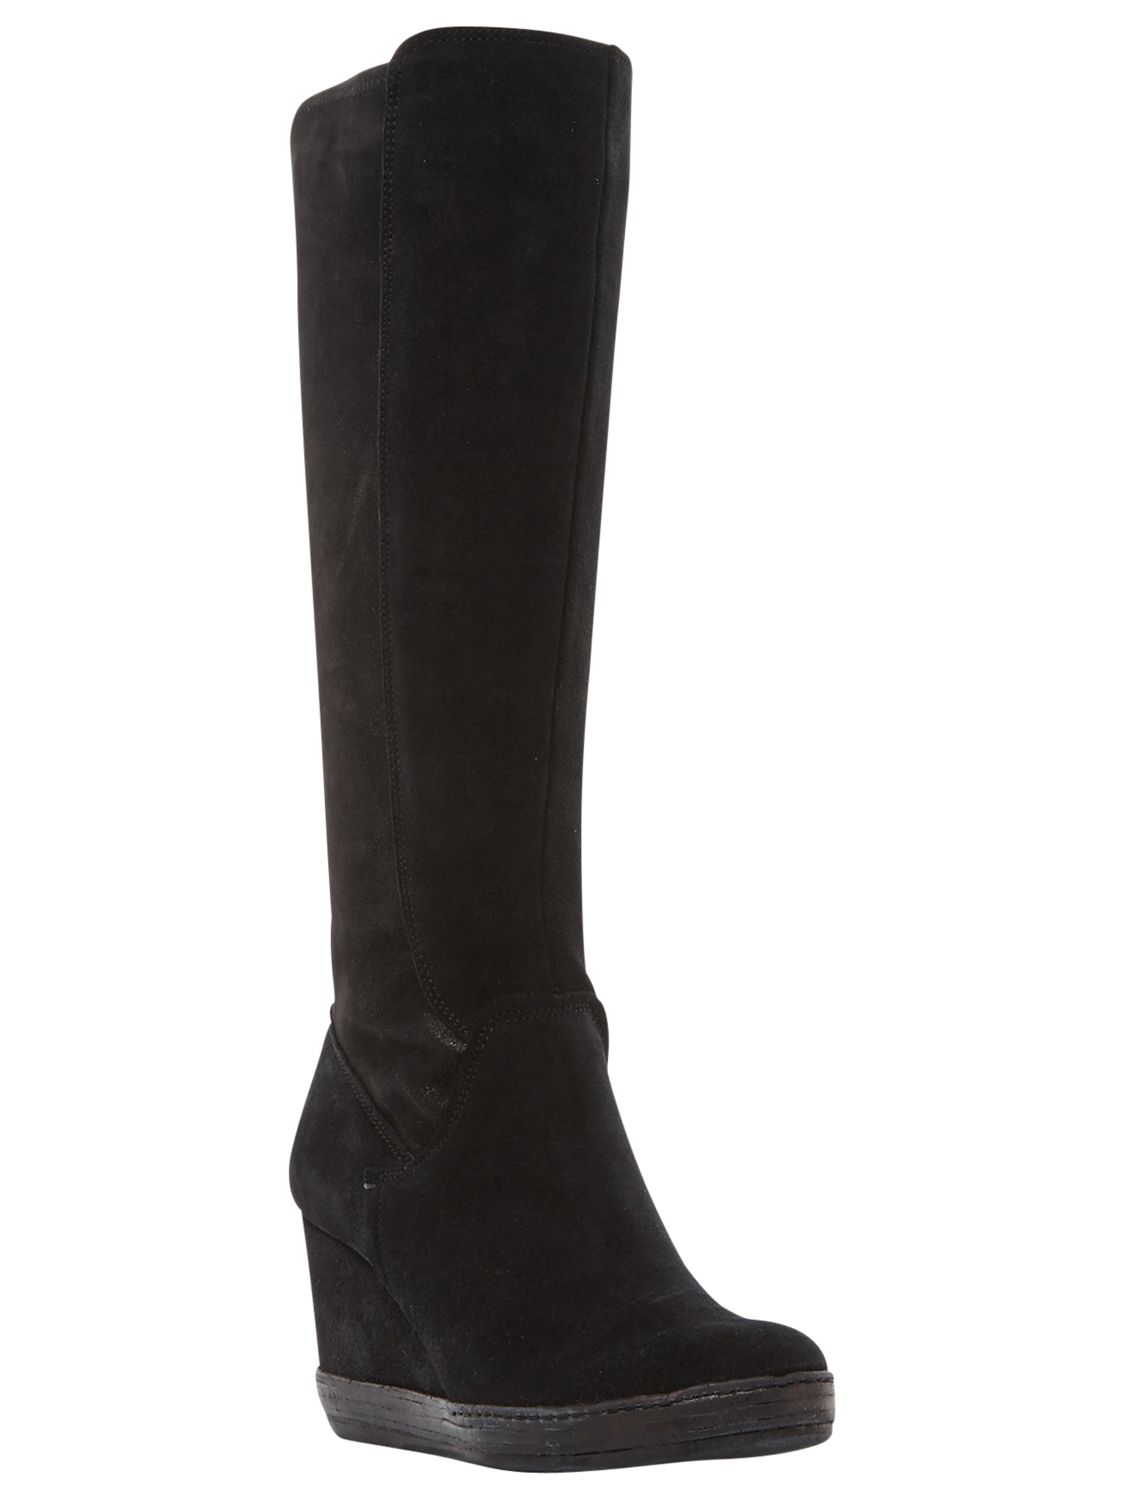 Dune Vera Wedge Heeled Knee High Boots, Black, 6